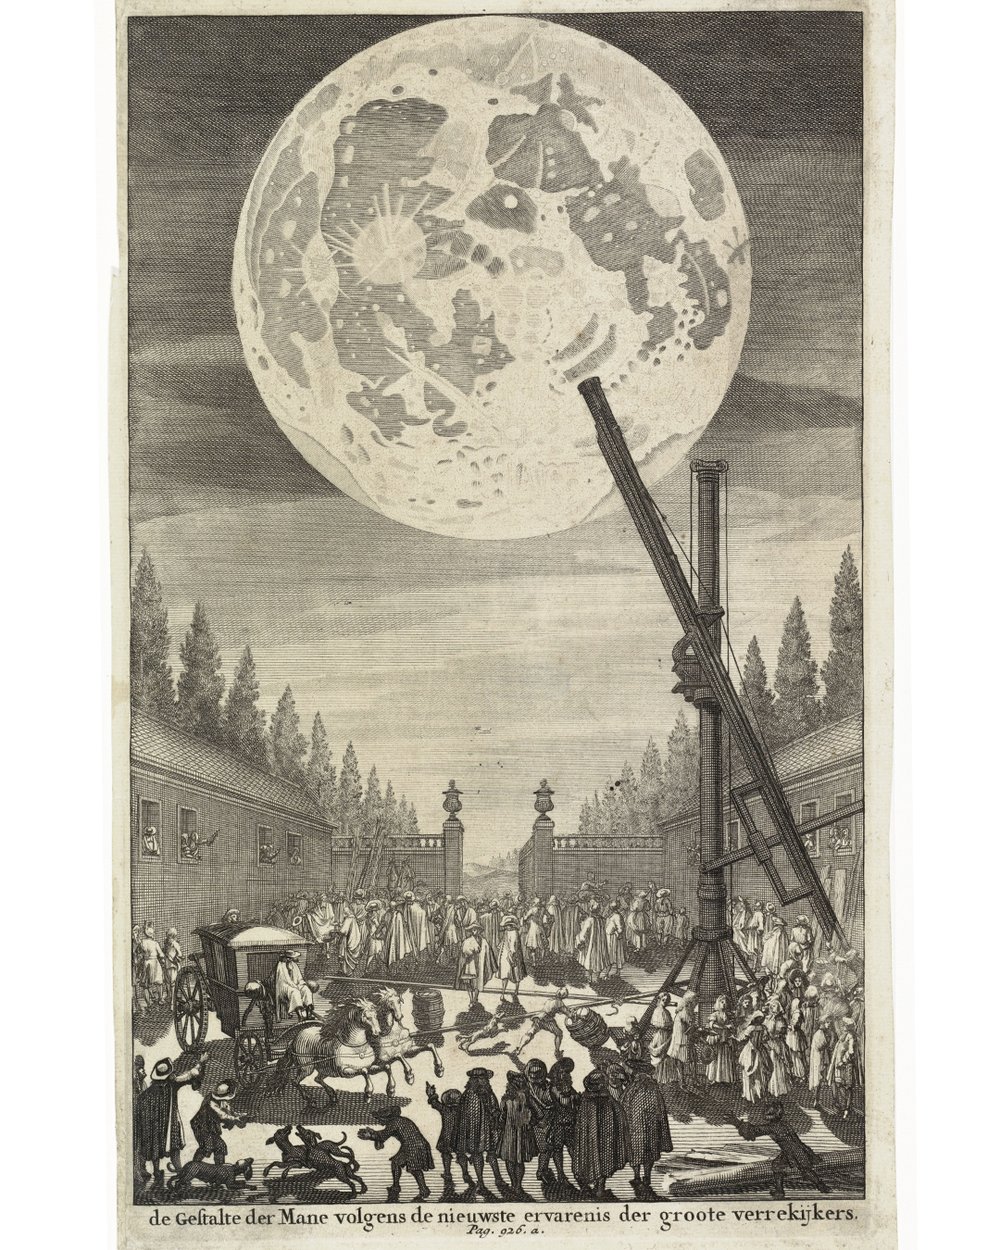 "Shape of the moon according to the latest binoculars" (1690)